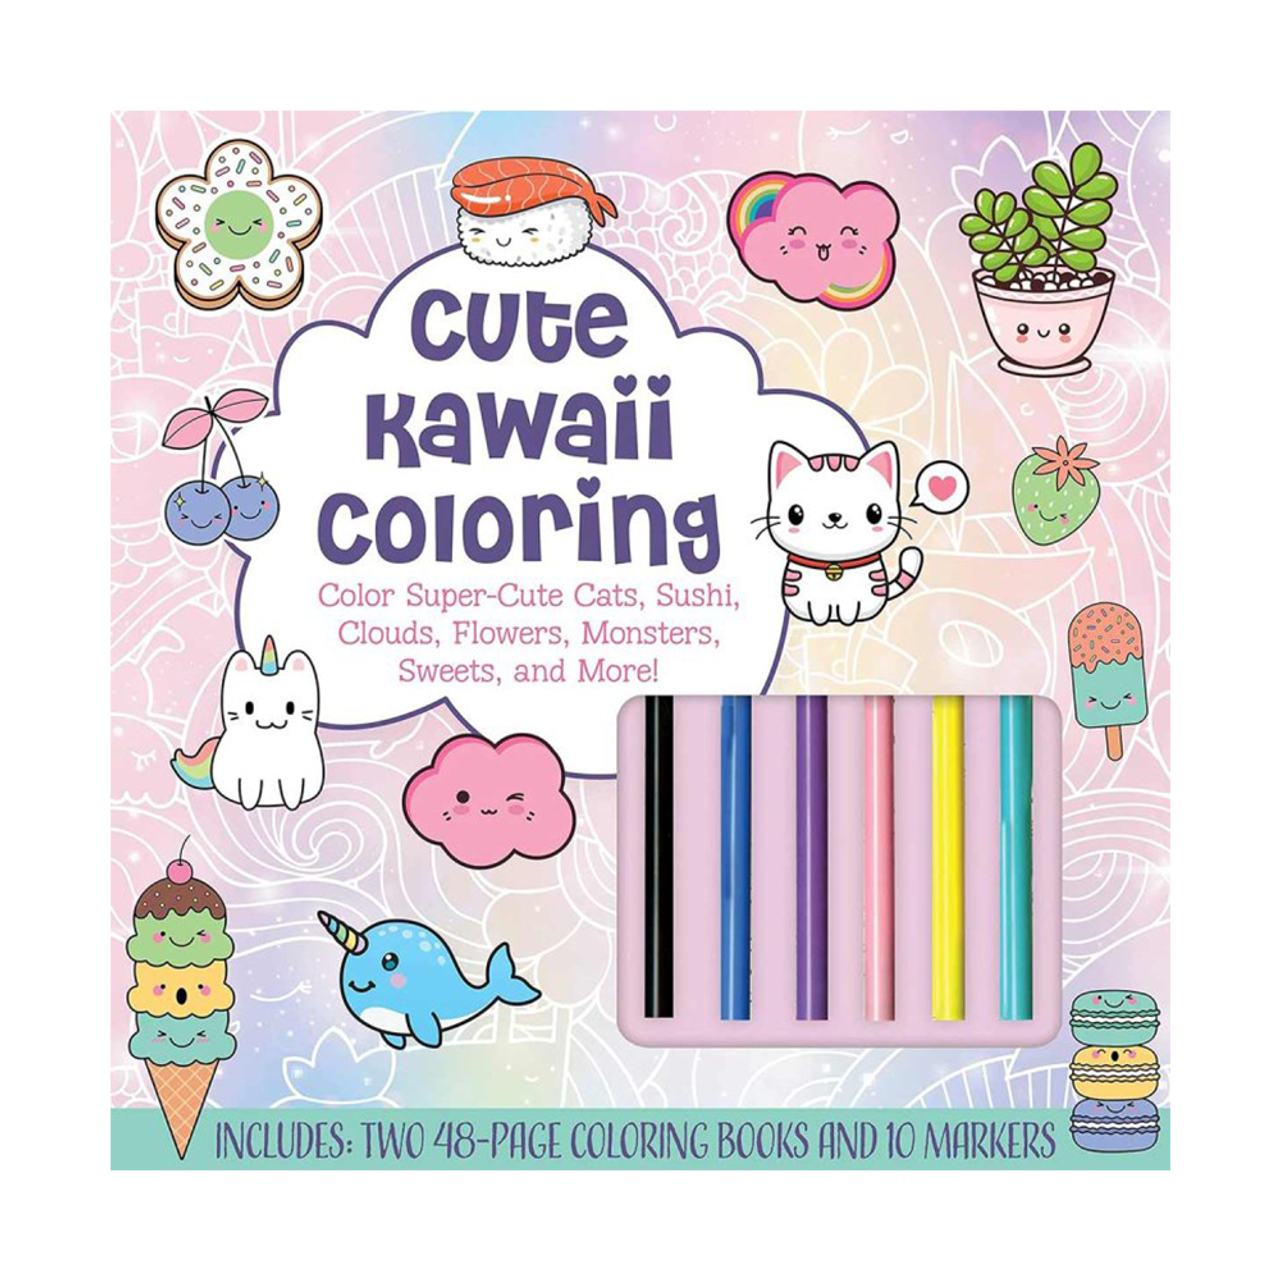 Cute kawaii colouring kit